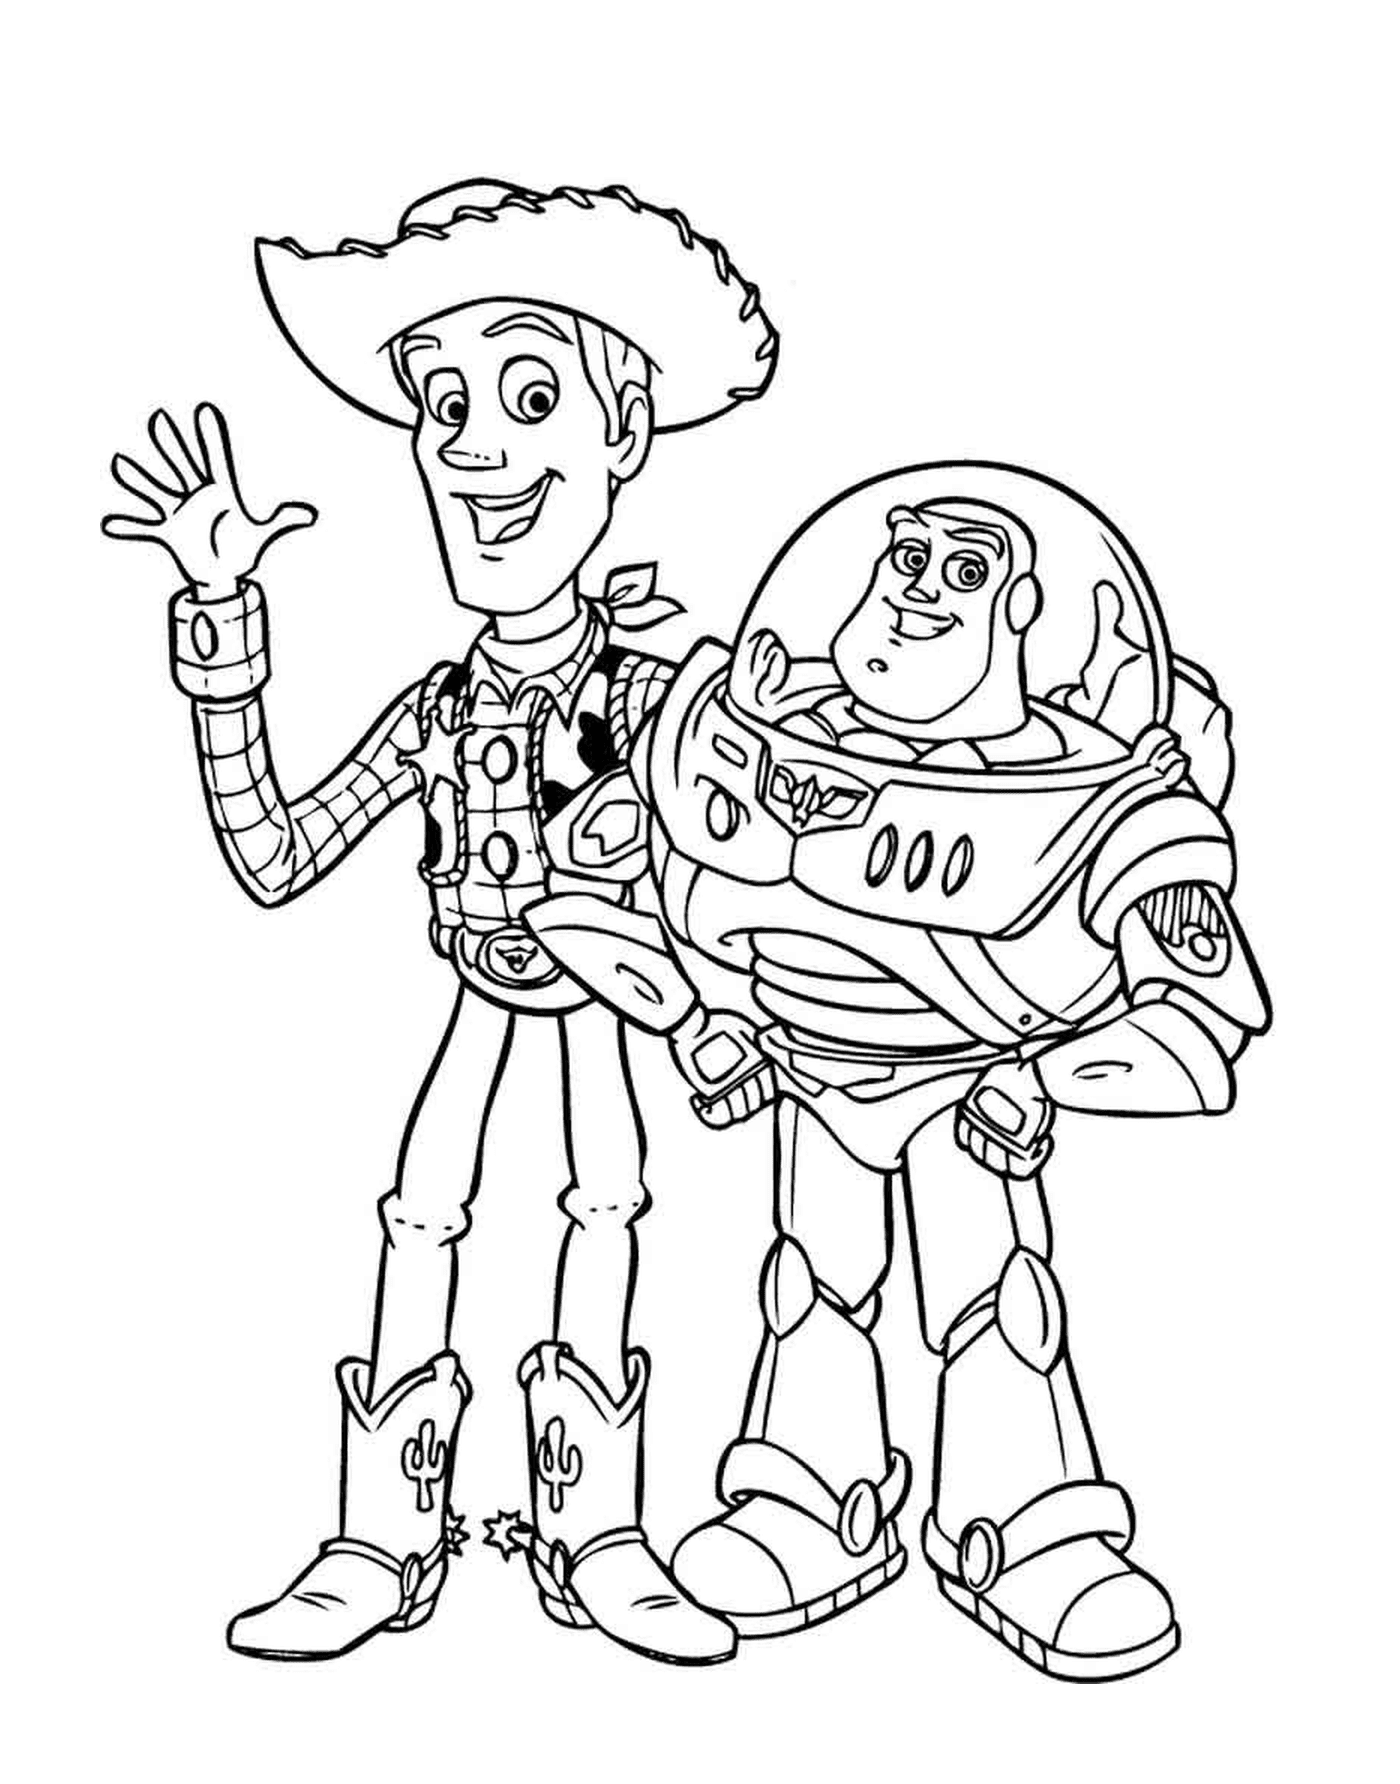  Buzz Lightyear and Woody, legendary duo 